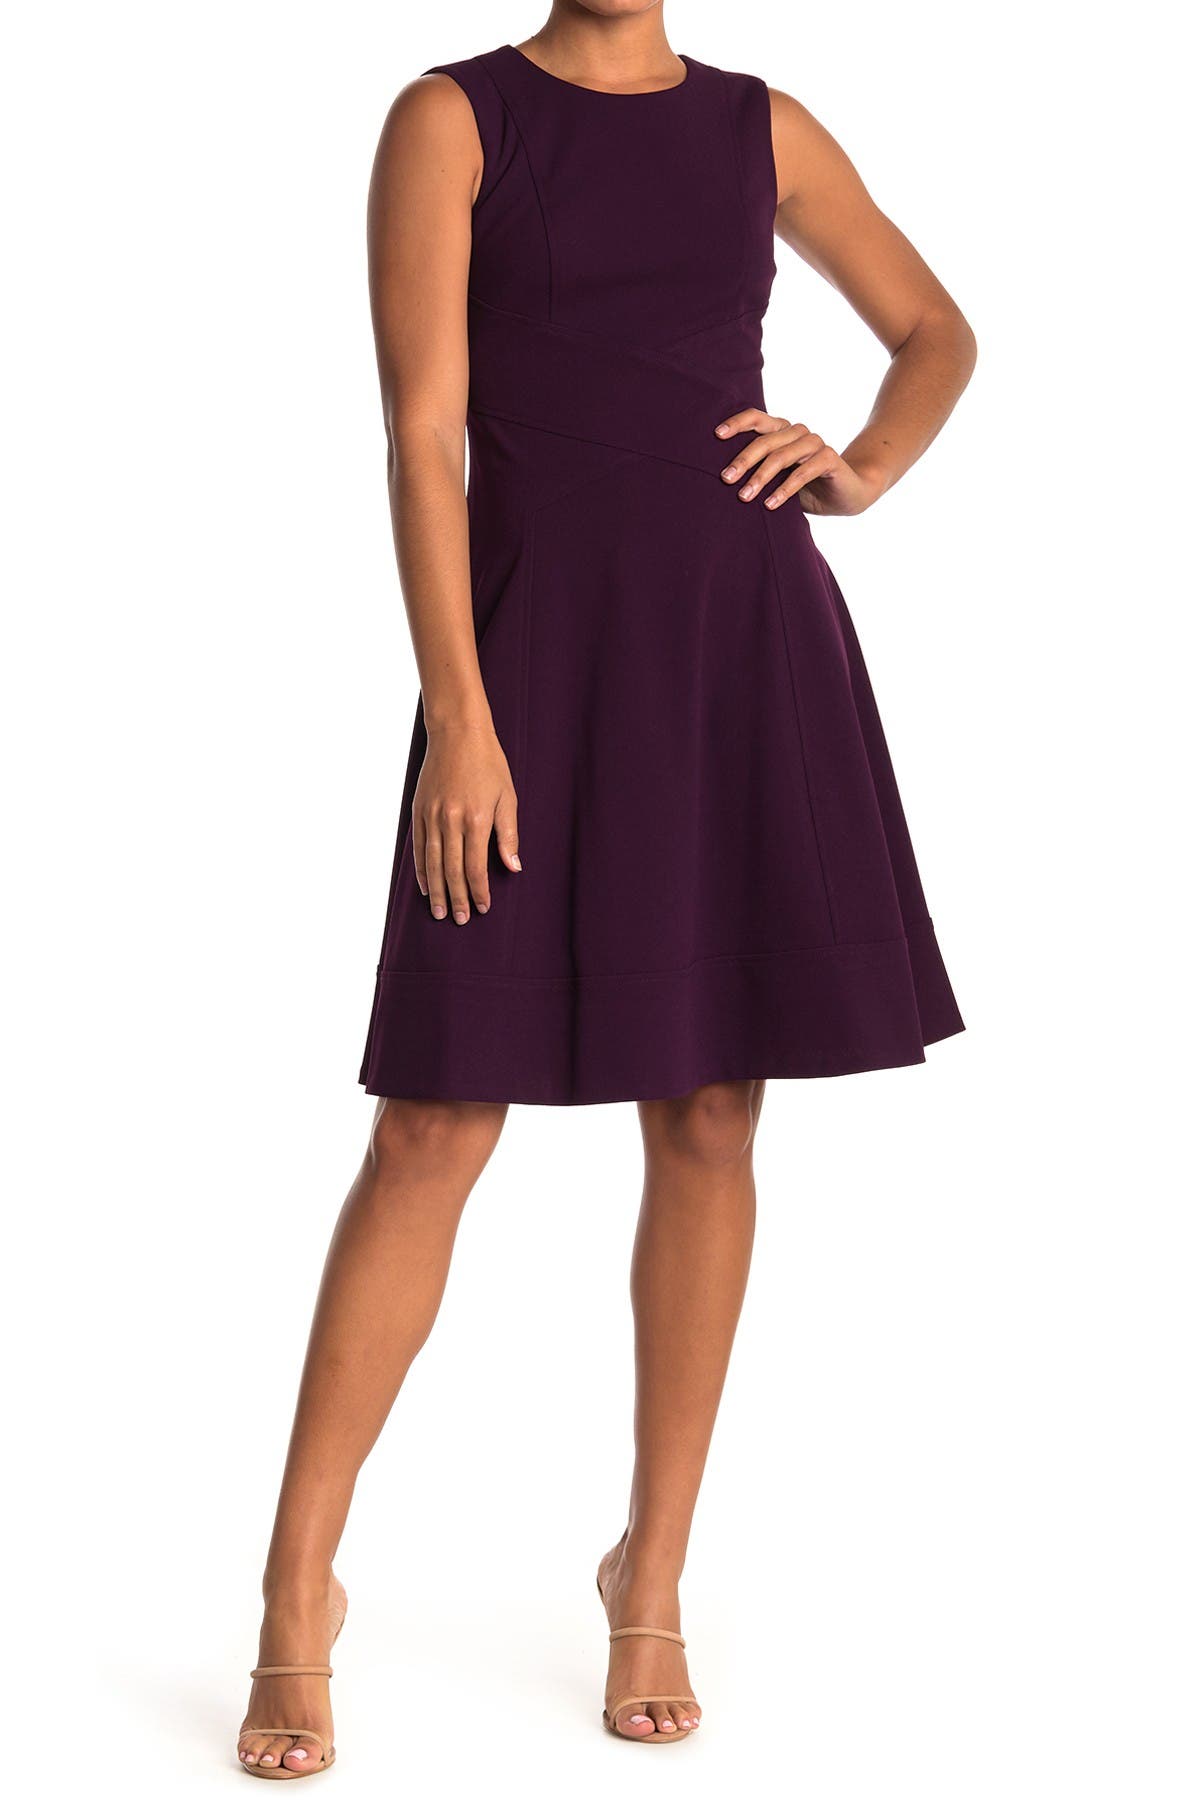 tommy hilfiger purple dress